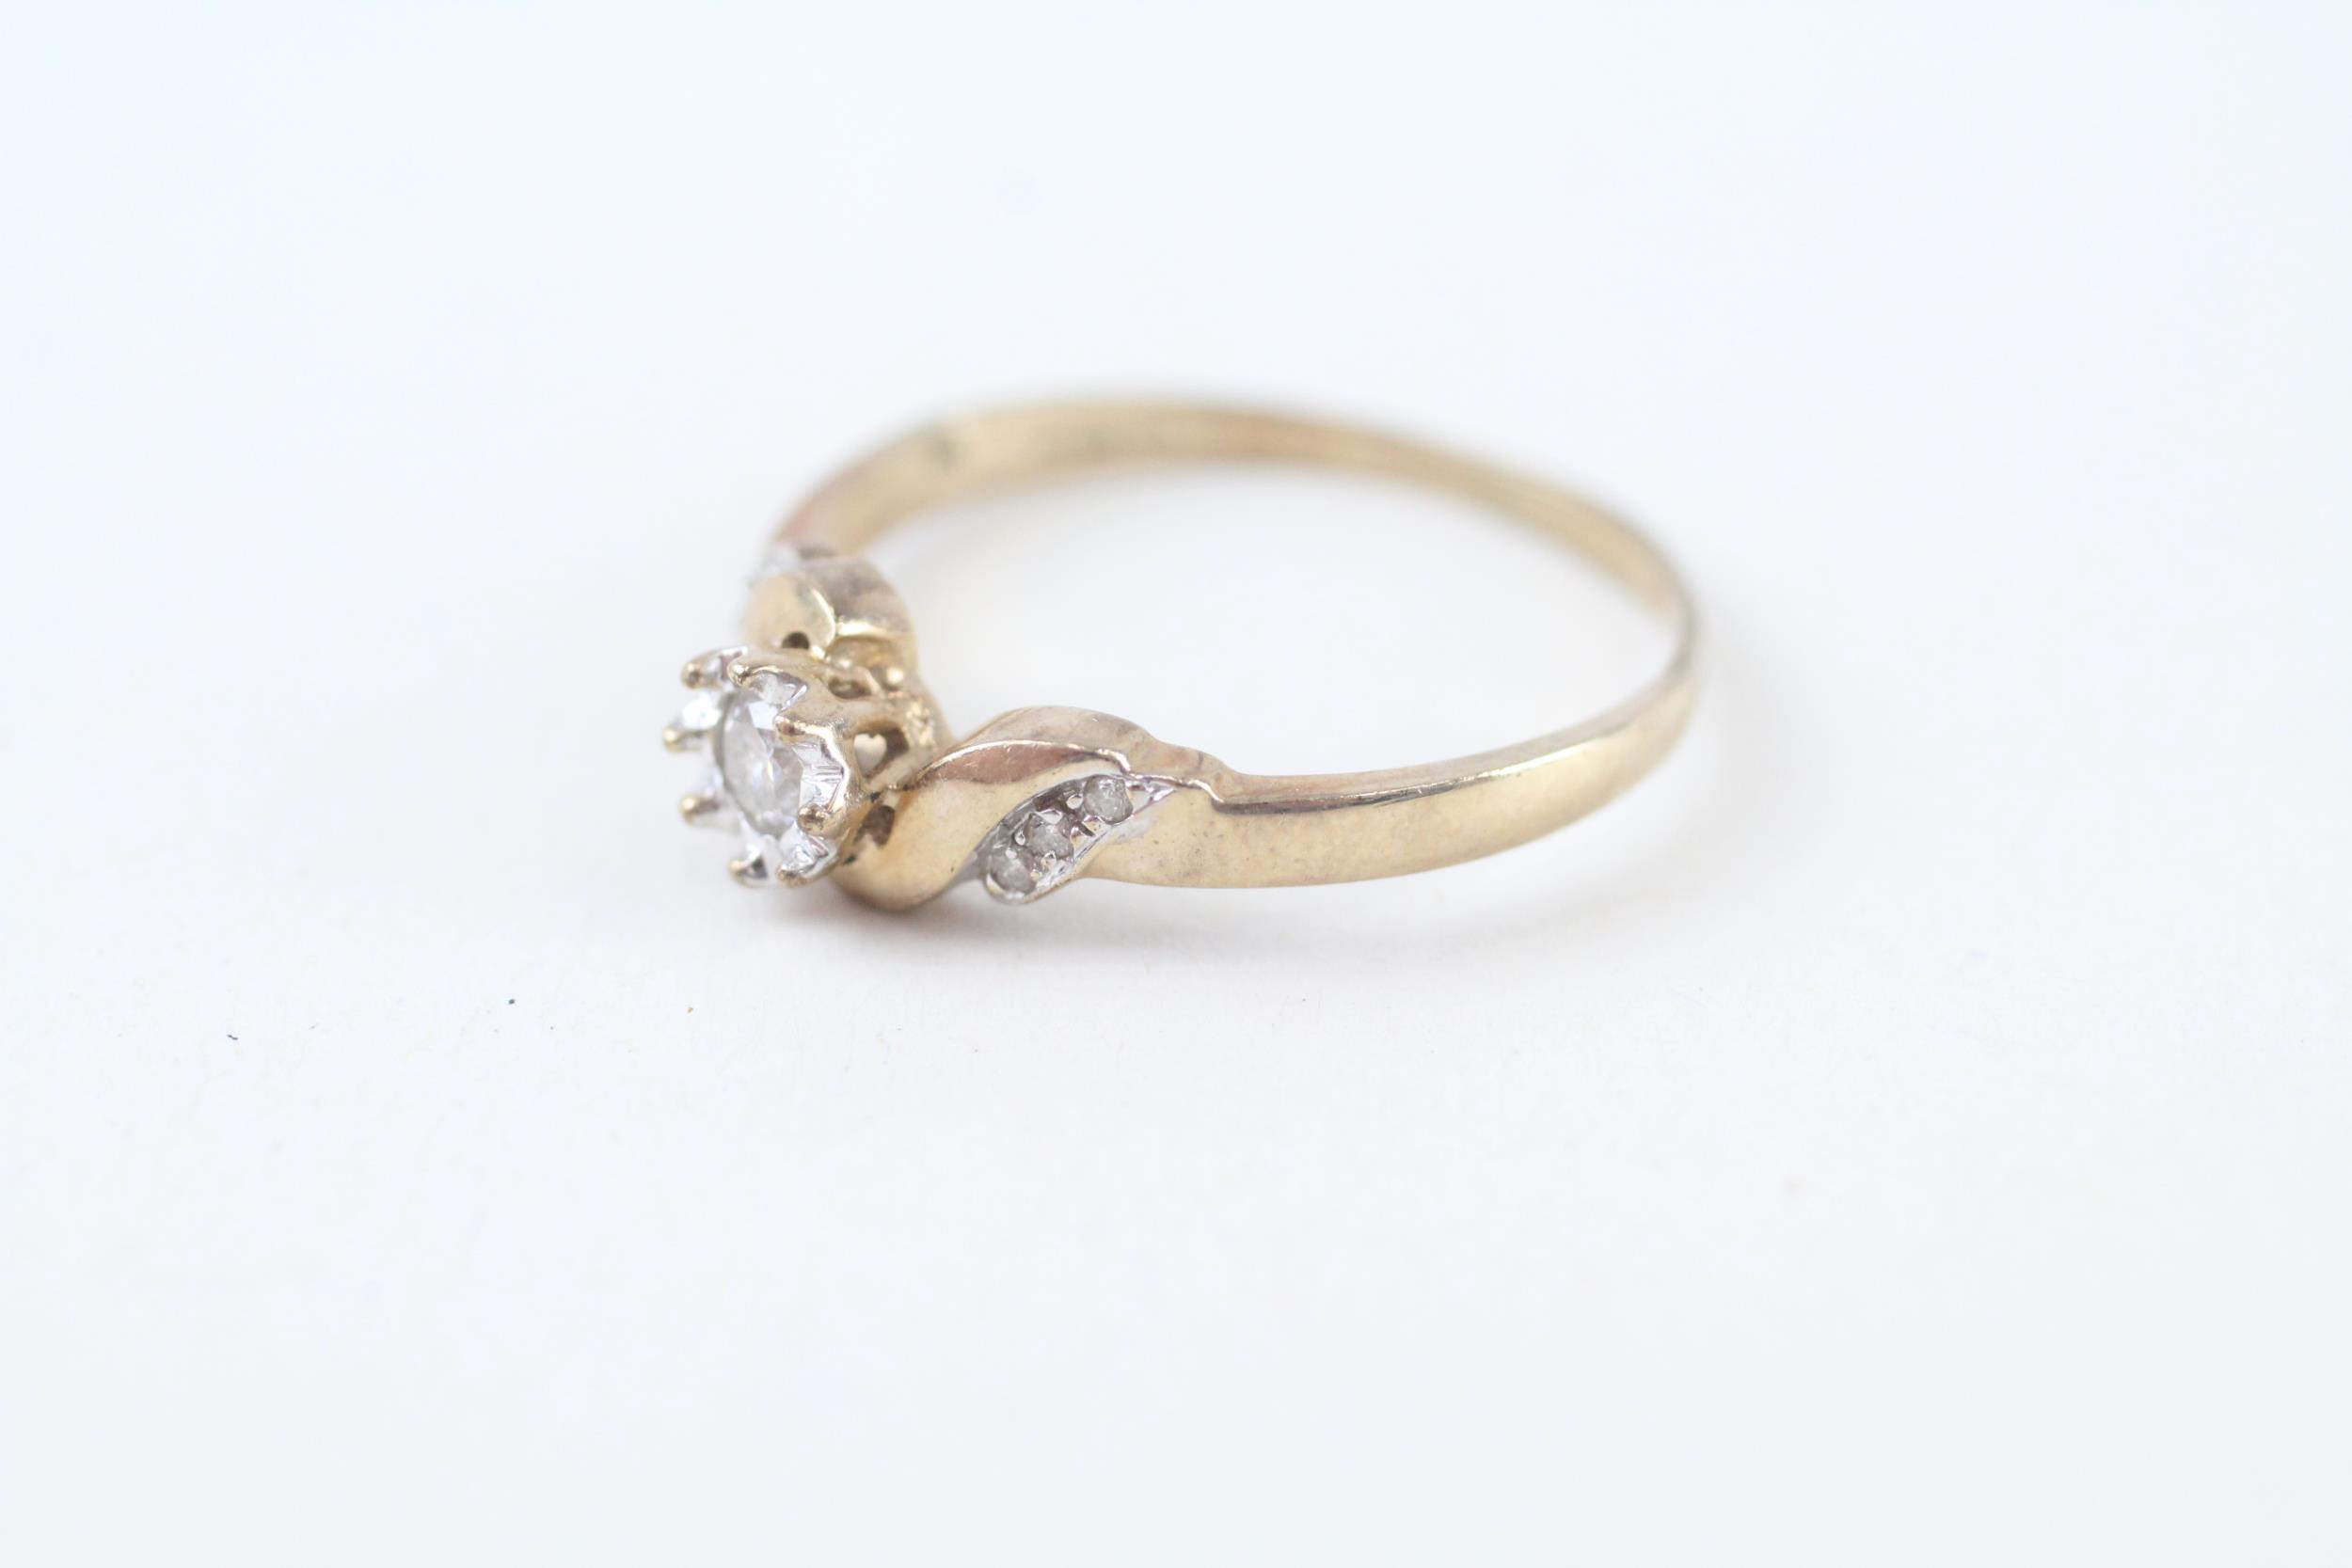 9ct gold round brilliant cut diamond single stone ring with diamond set shank (1.9g) Size P 1/2 - Image 3 of 4